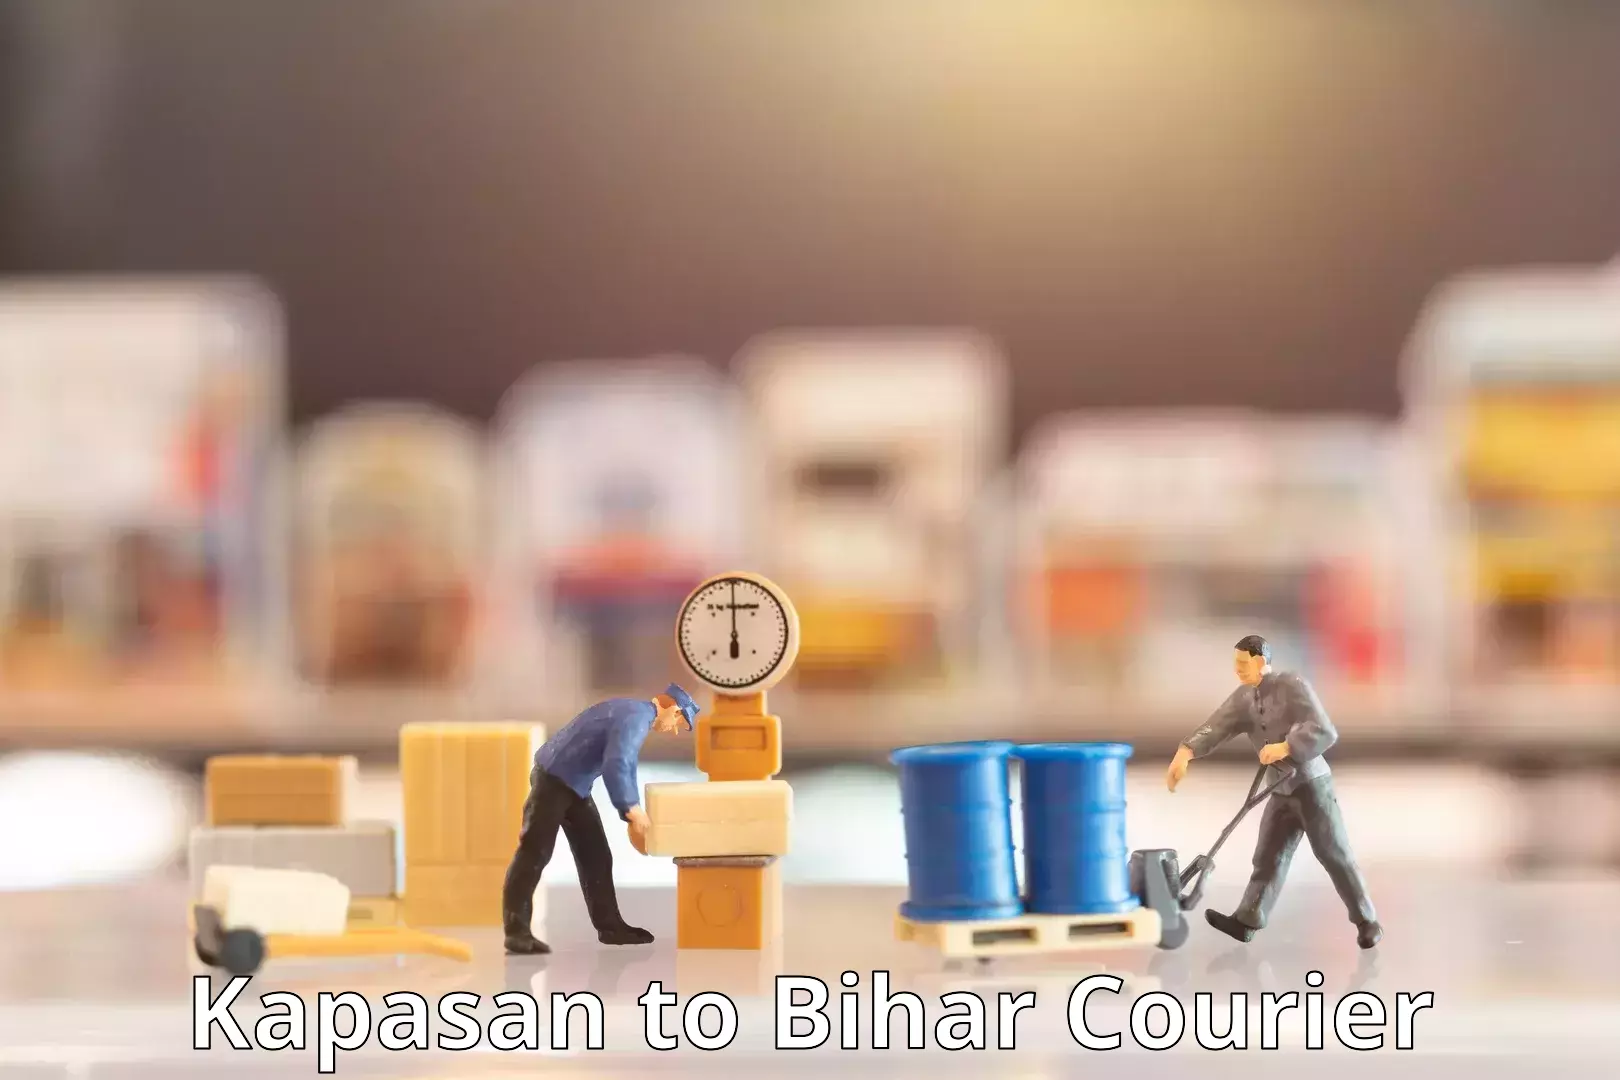 Courier service innovation Kapasan to Bihar